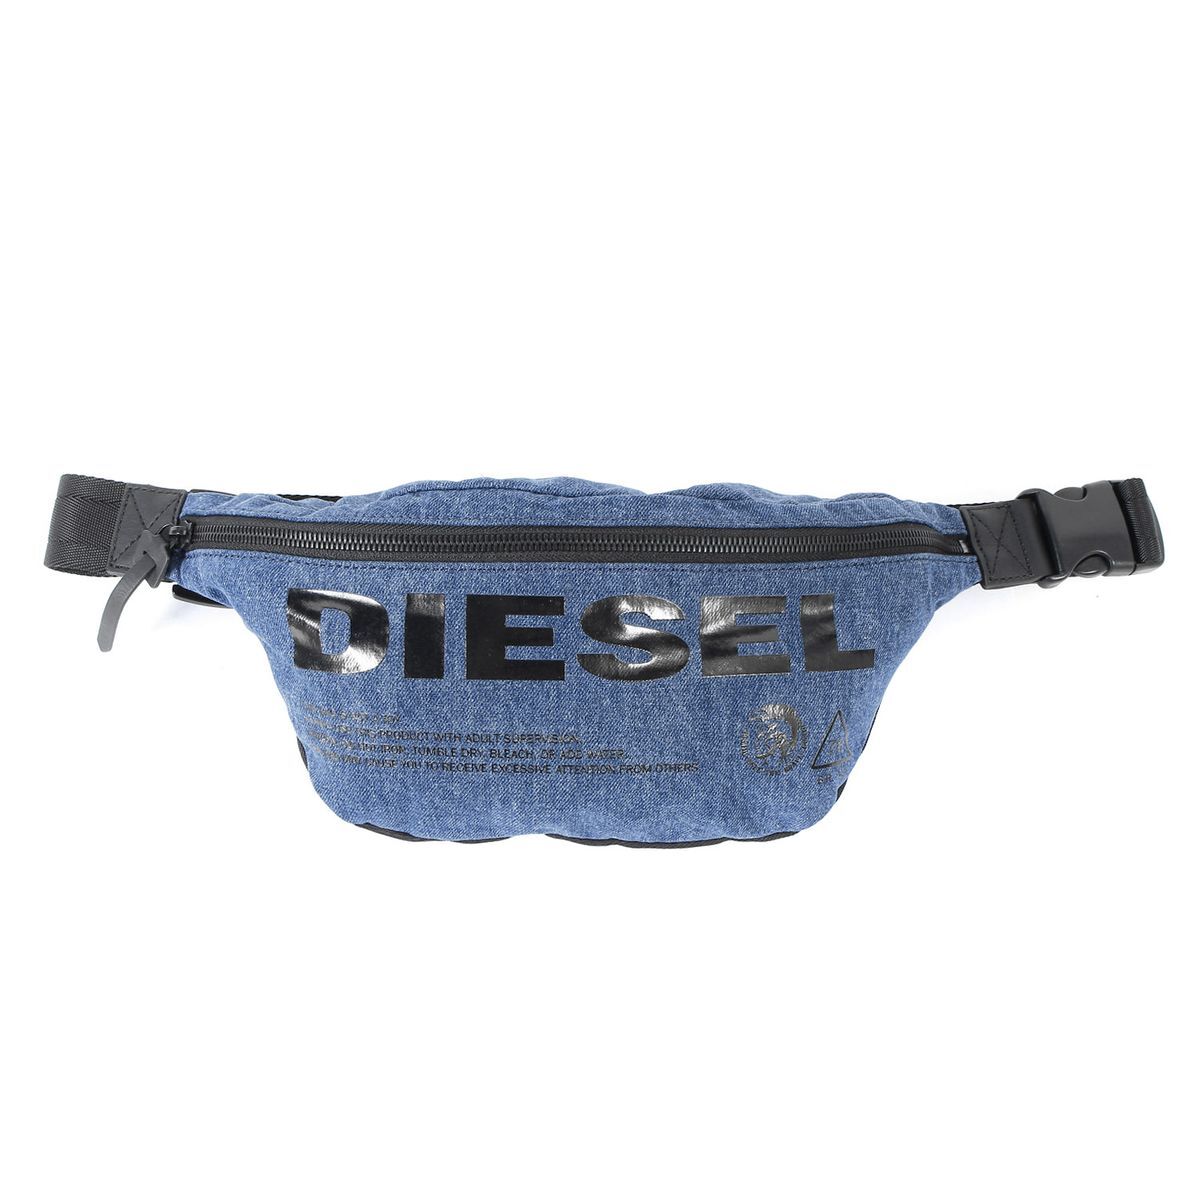 Tasche - Belt Bag 'THISBAGISNOTATOY / F-SUSE X06192', Blau